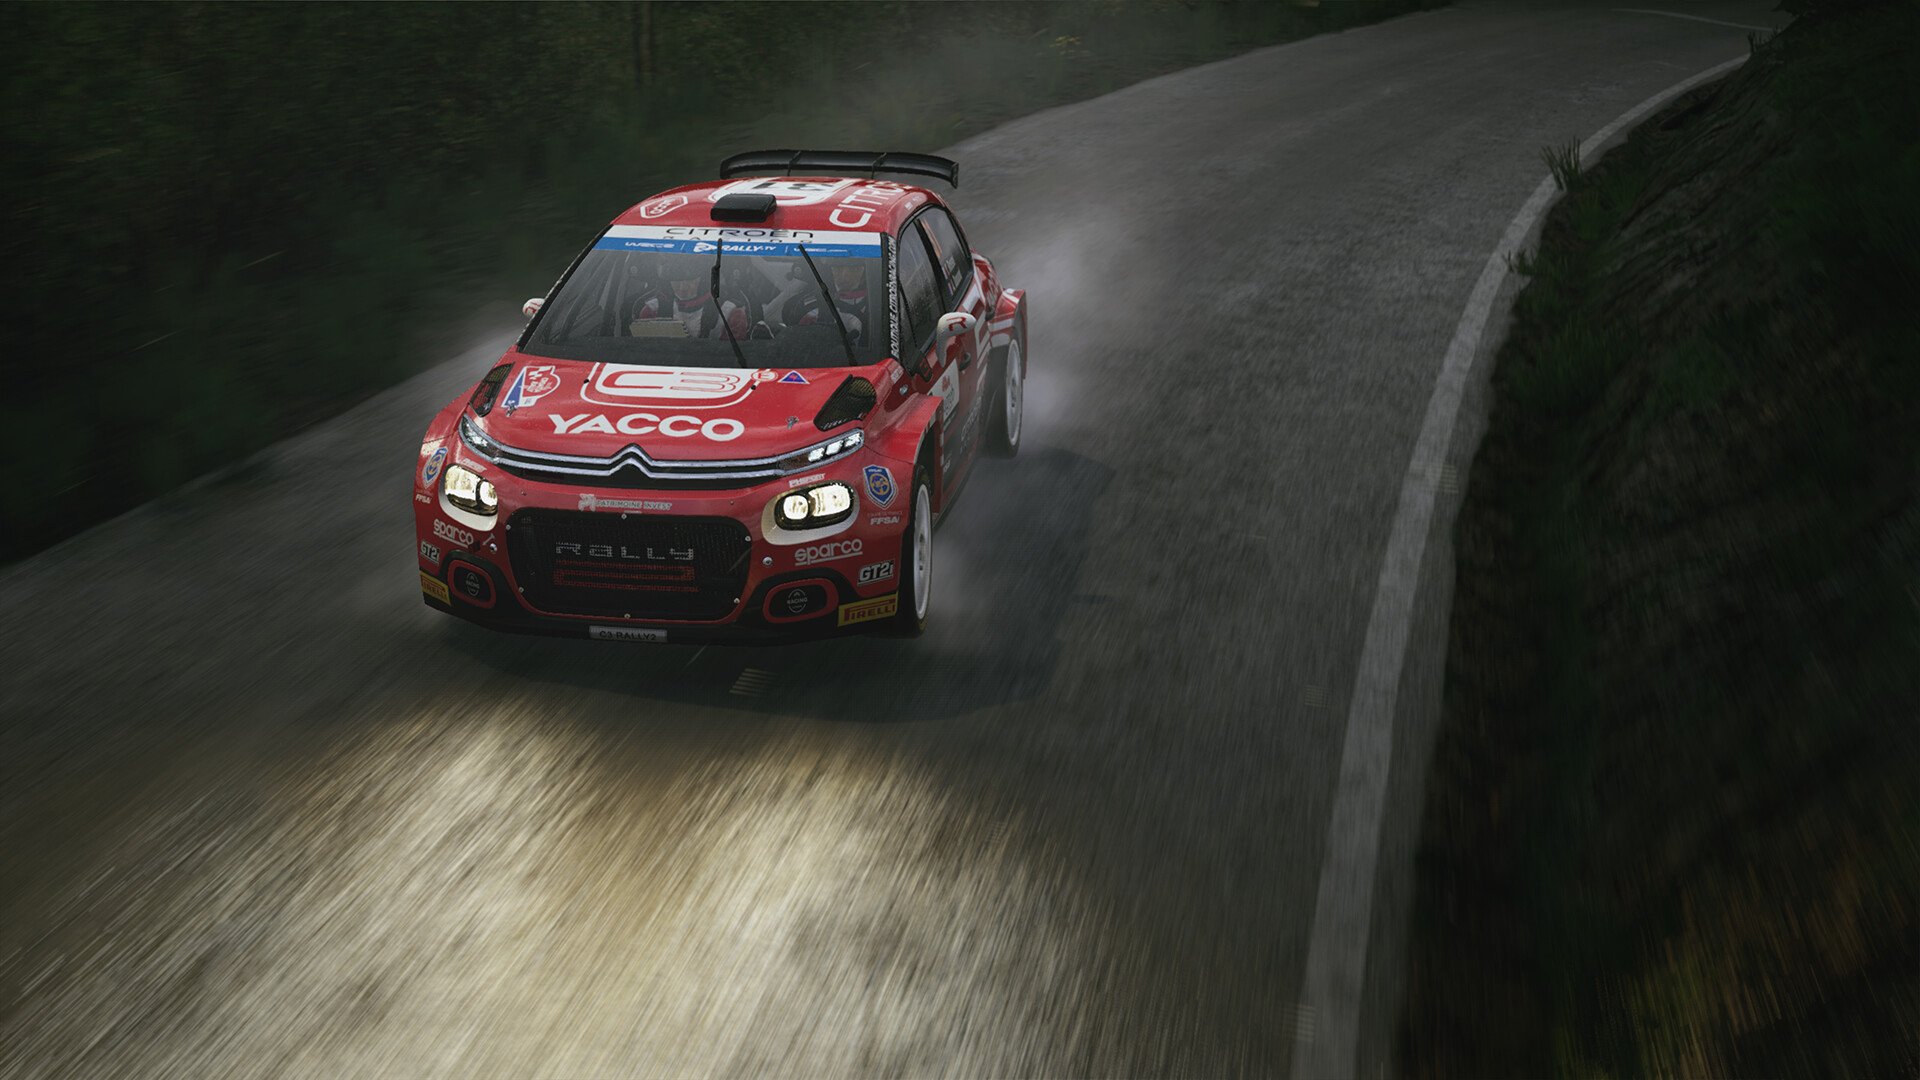 EA SPORTS WRC: Requisitos en PC - Outlaws Racing